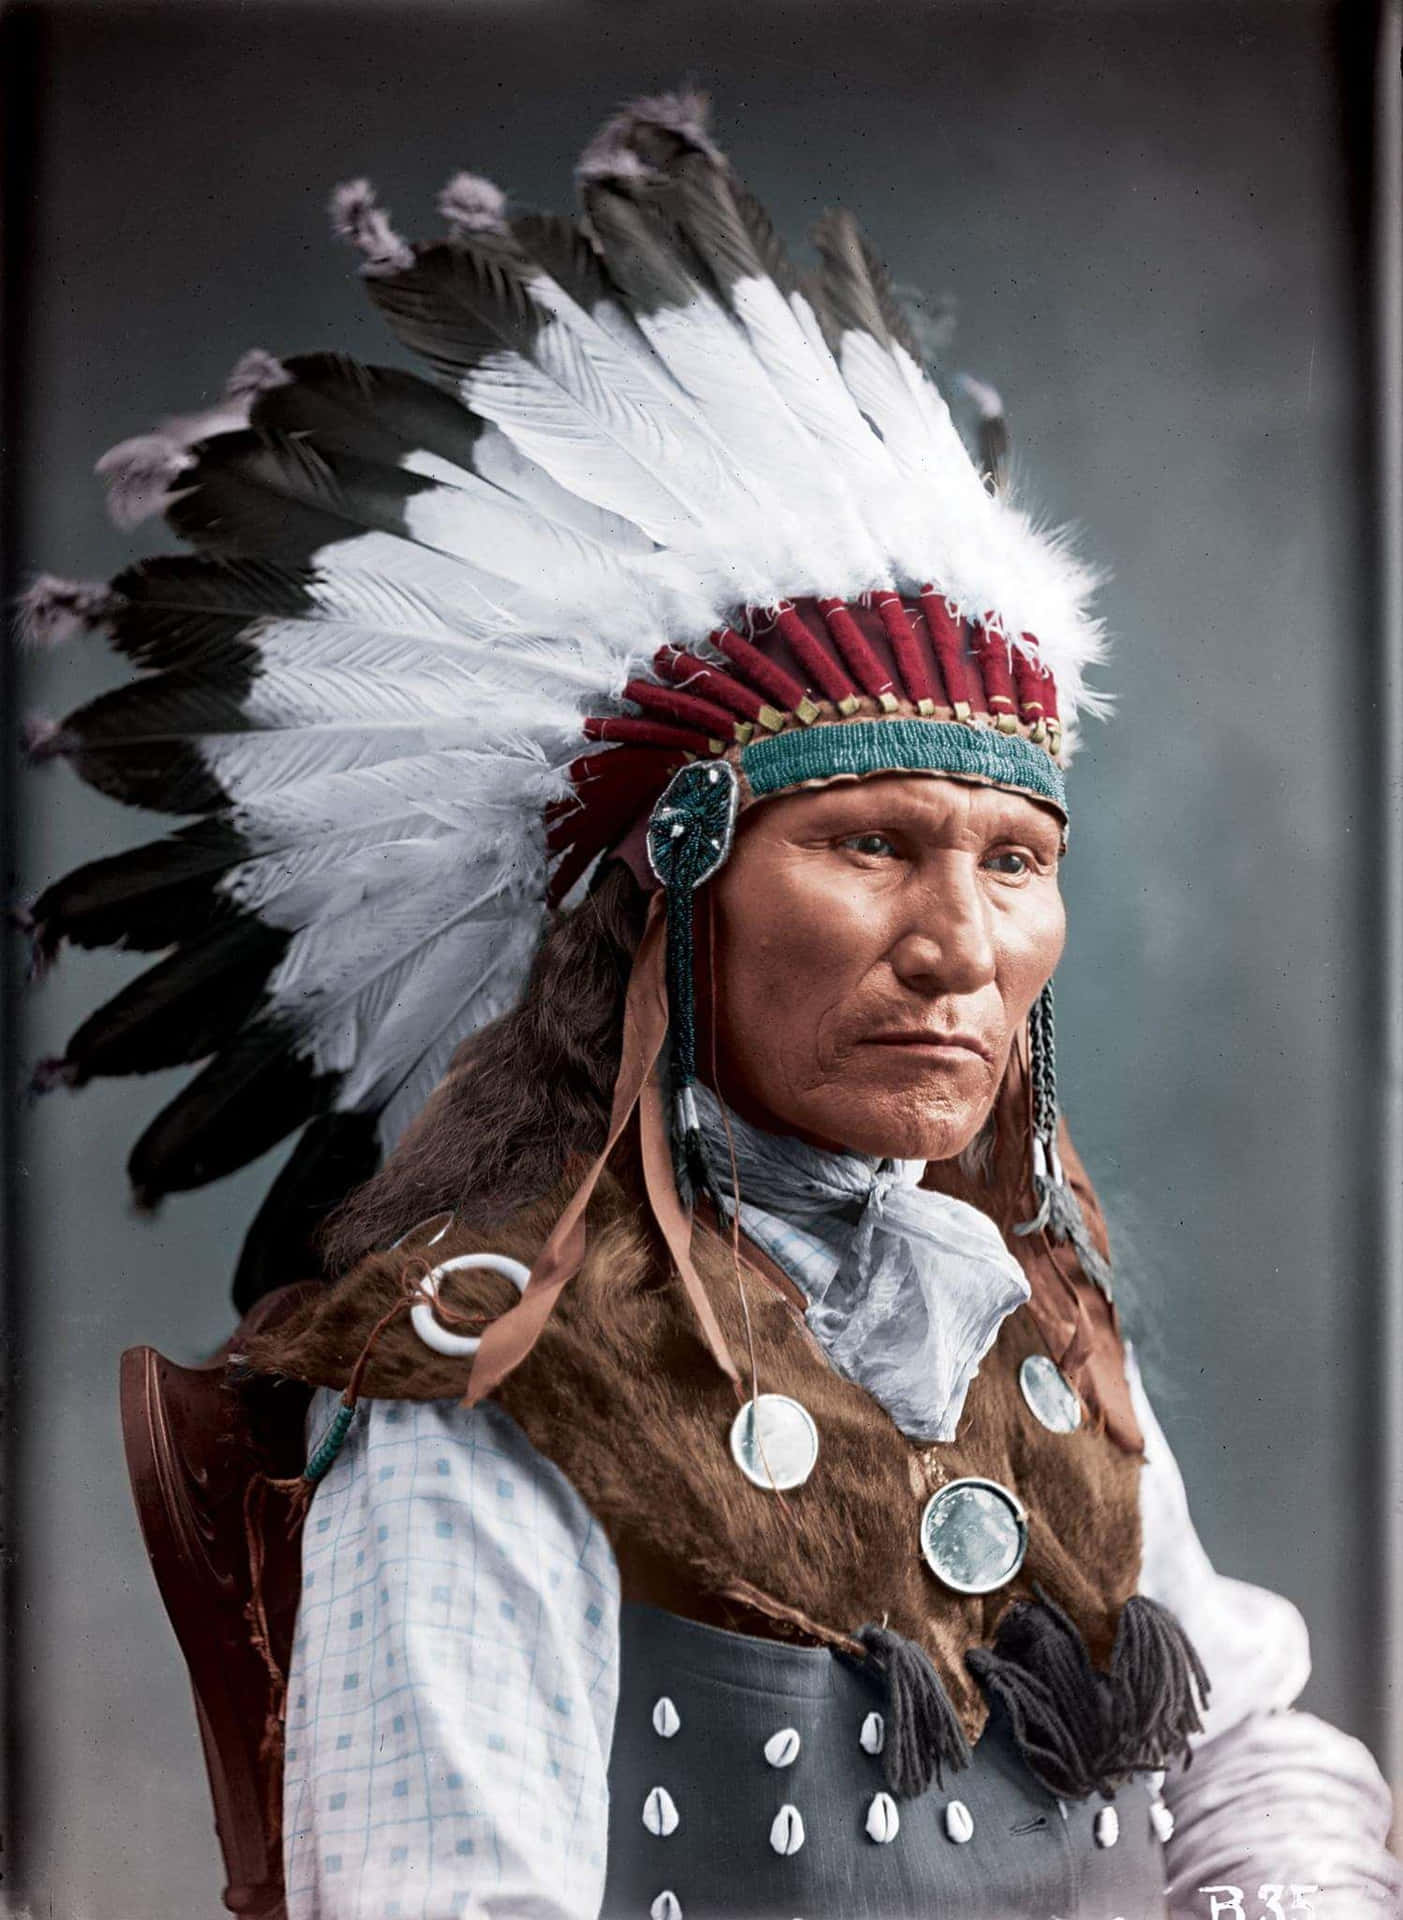 A Man In A Native American Headdress